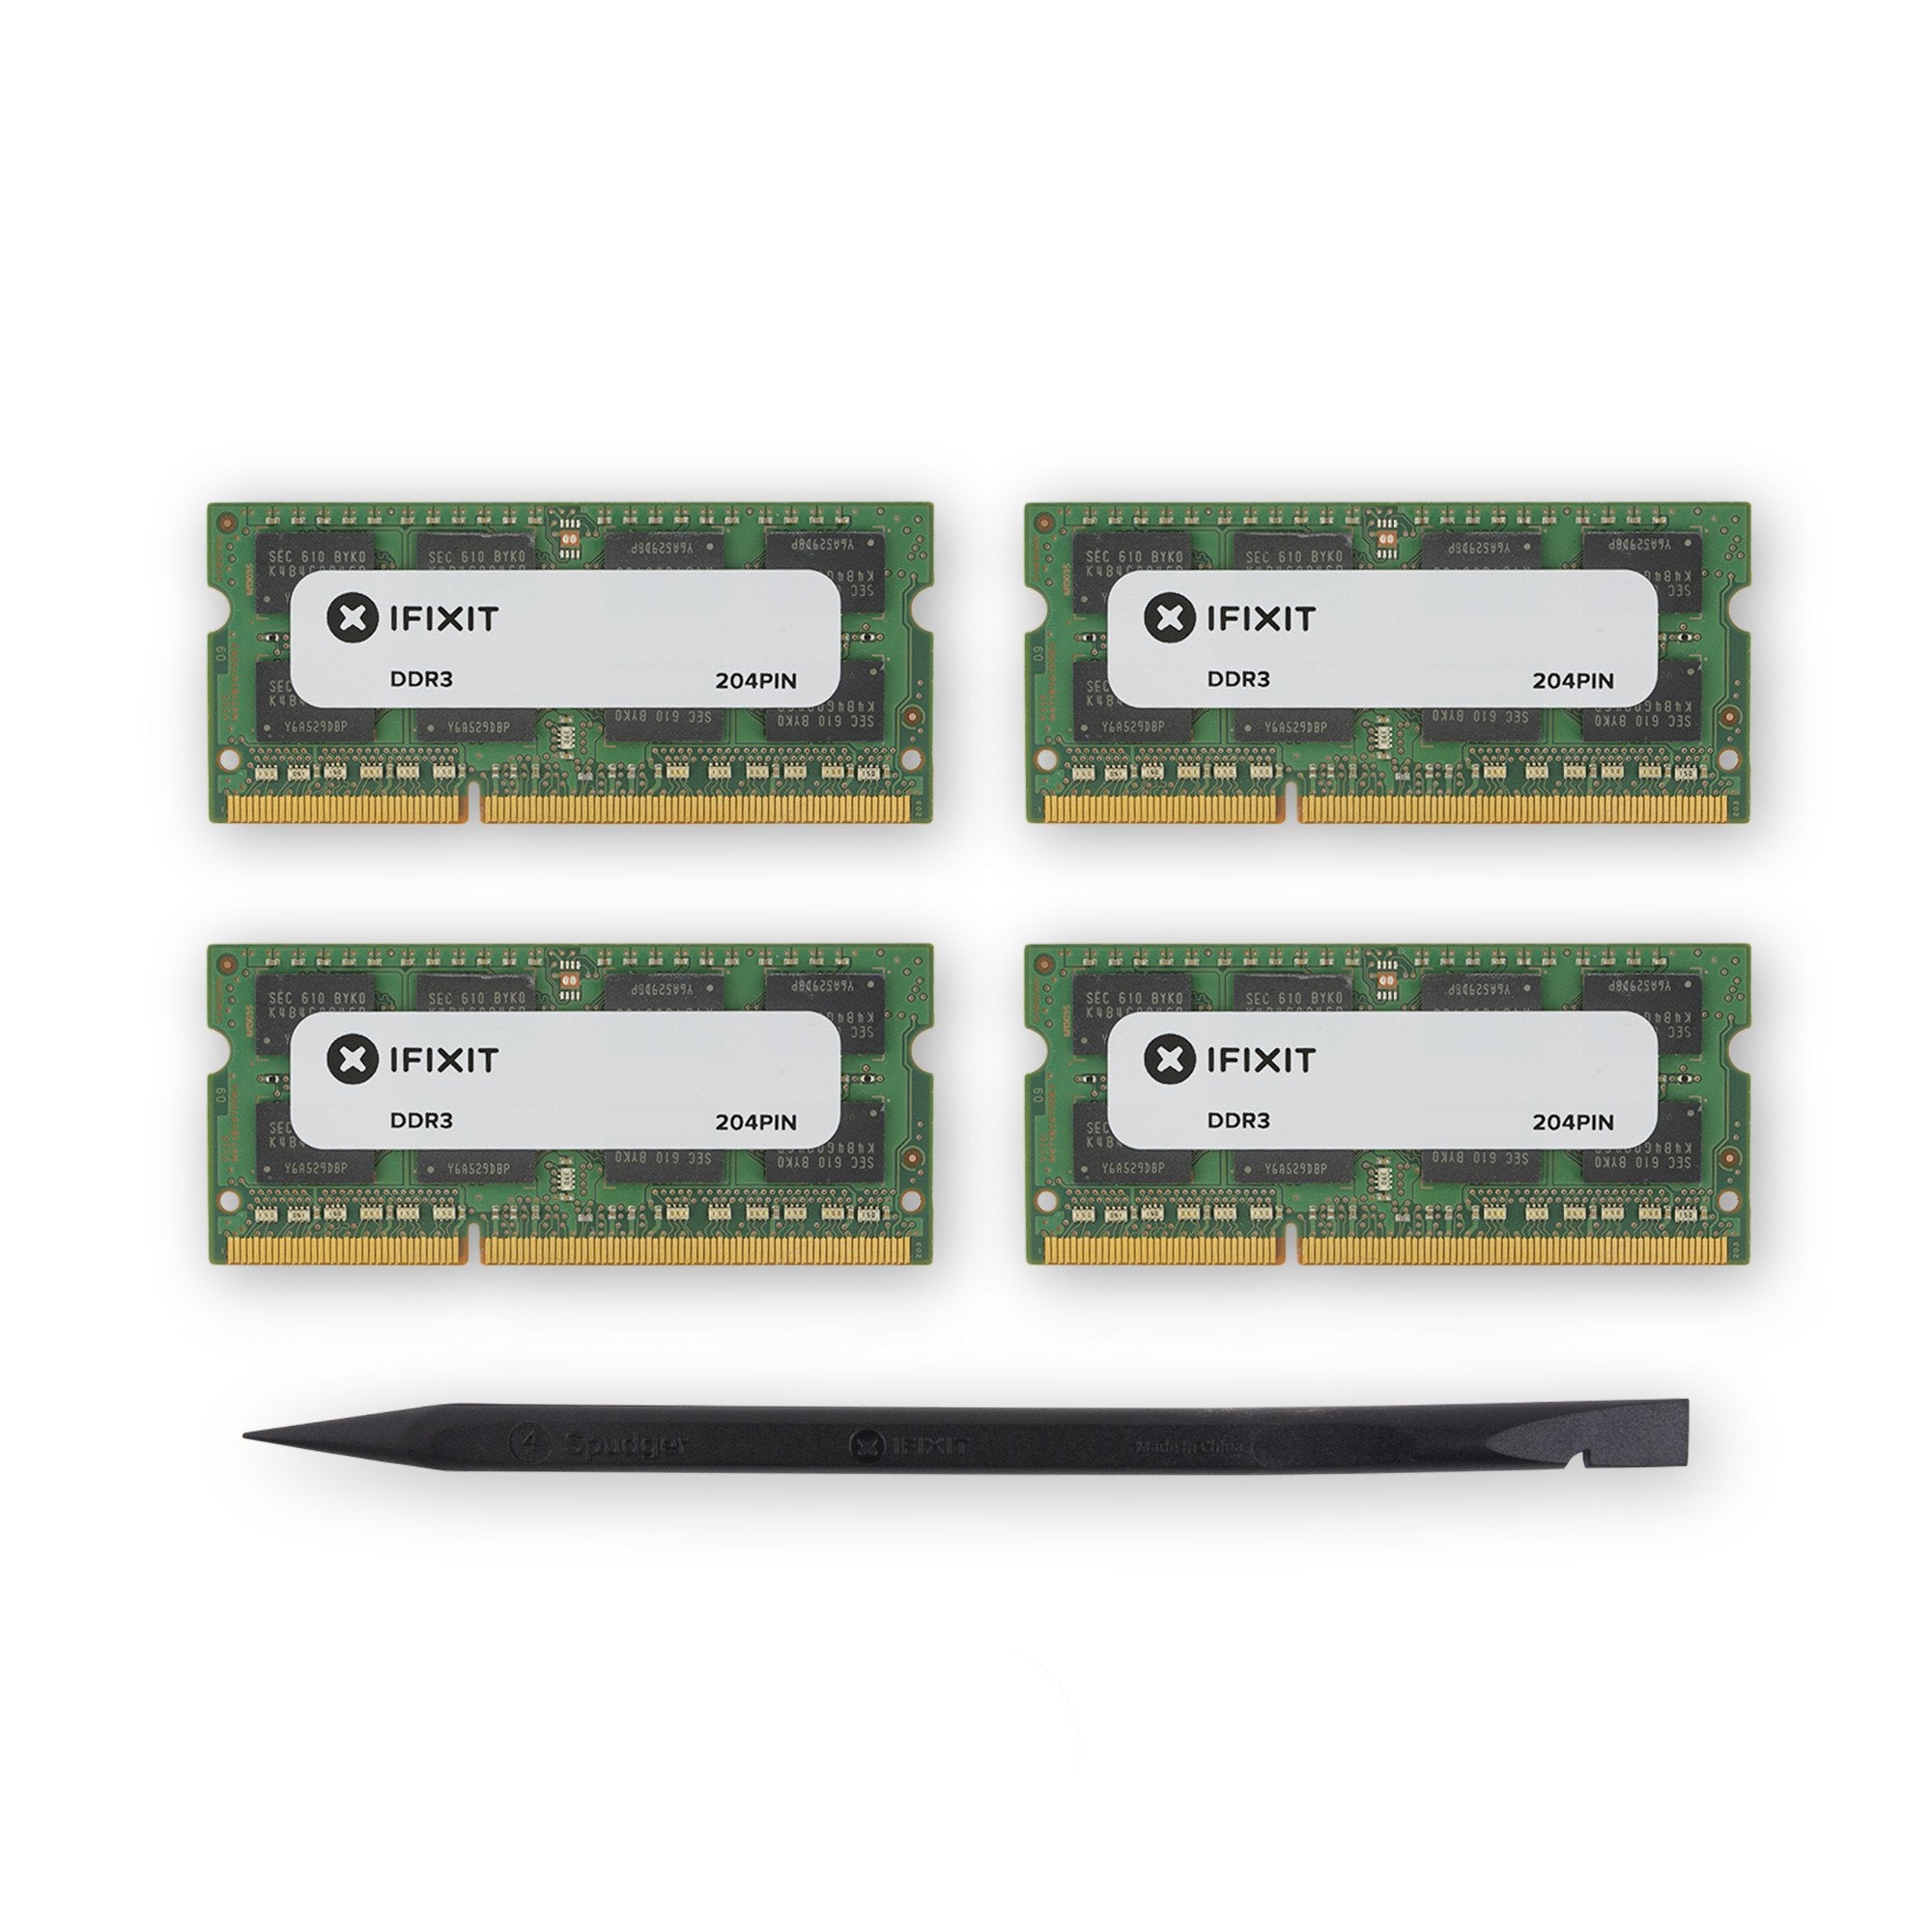 iMac Intel 27" EMC 2806 (Late 2014 and Mid 2015, 5K Display) Memory Maxxer RAM Upgrade